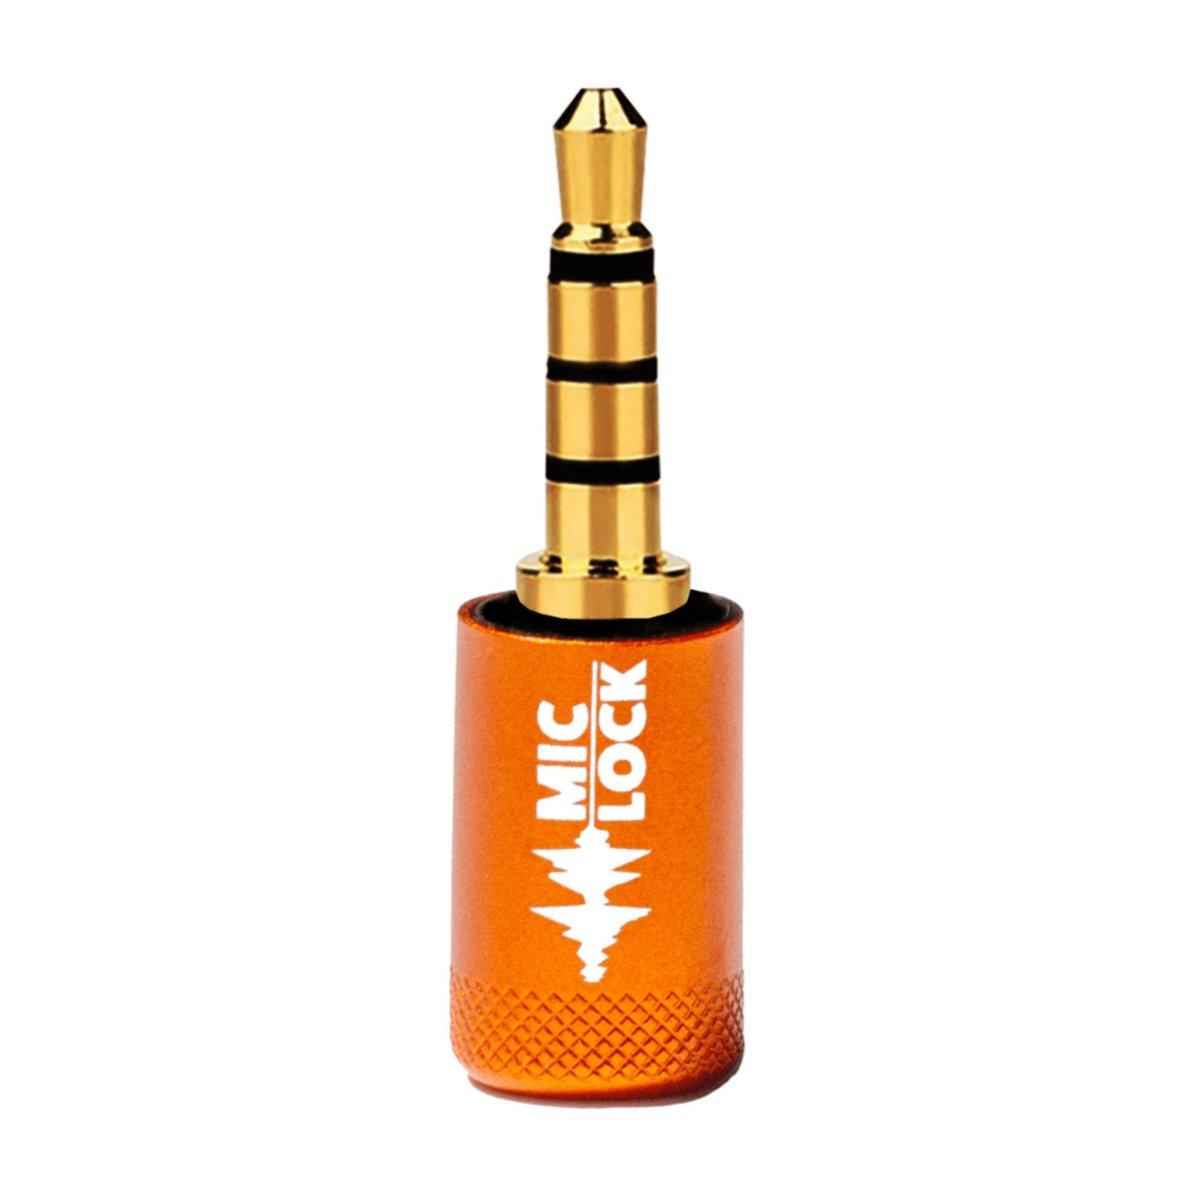 Mic-Lock 3.5mm Single-Ended Microphone Blocker - Metallic Orange - Mic-Lock